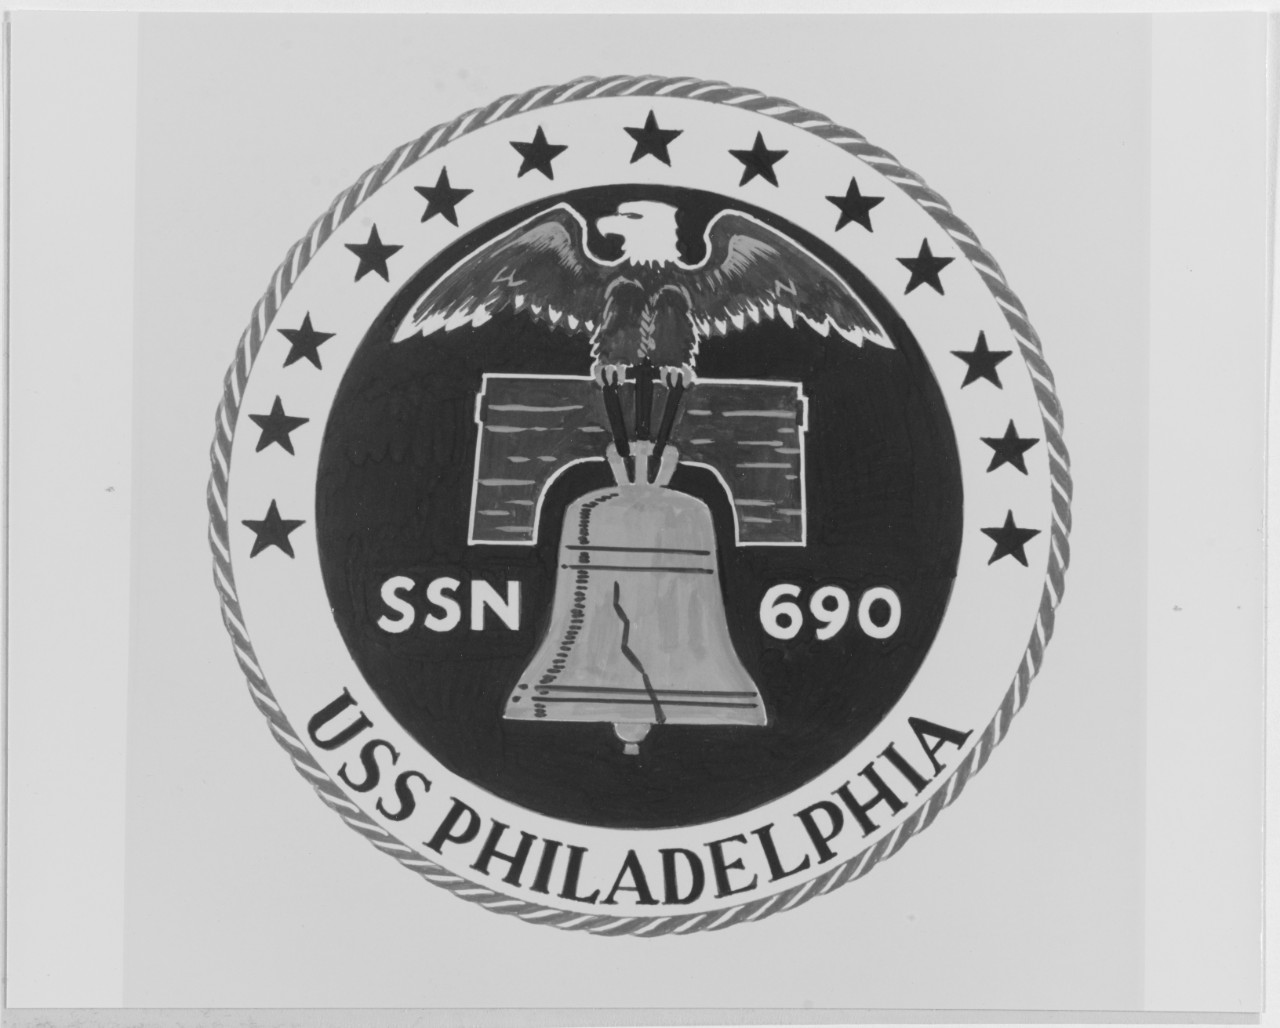 USS PHILADELPHIA (SSN-690)